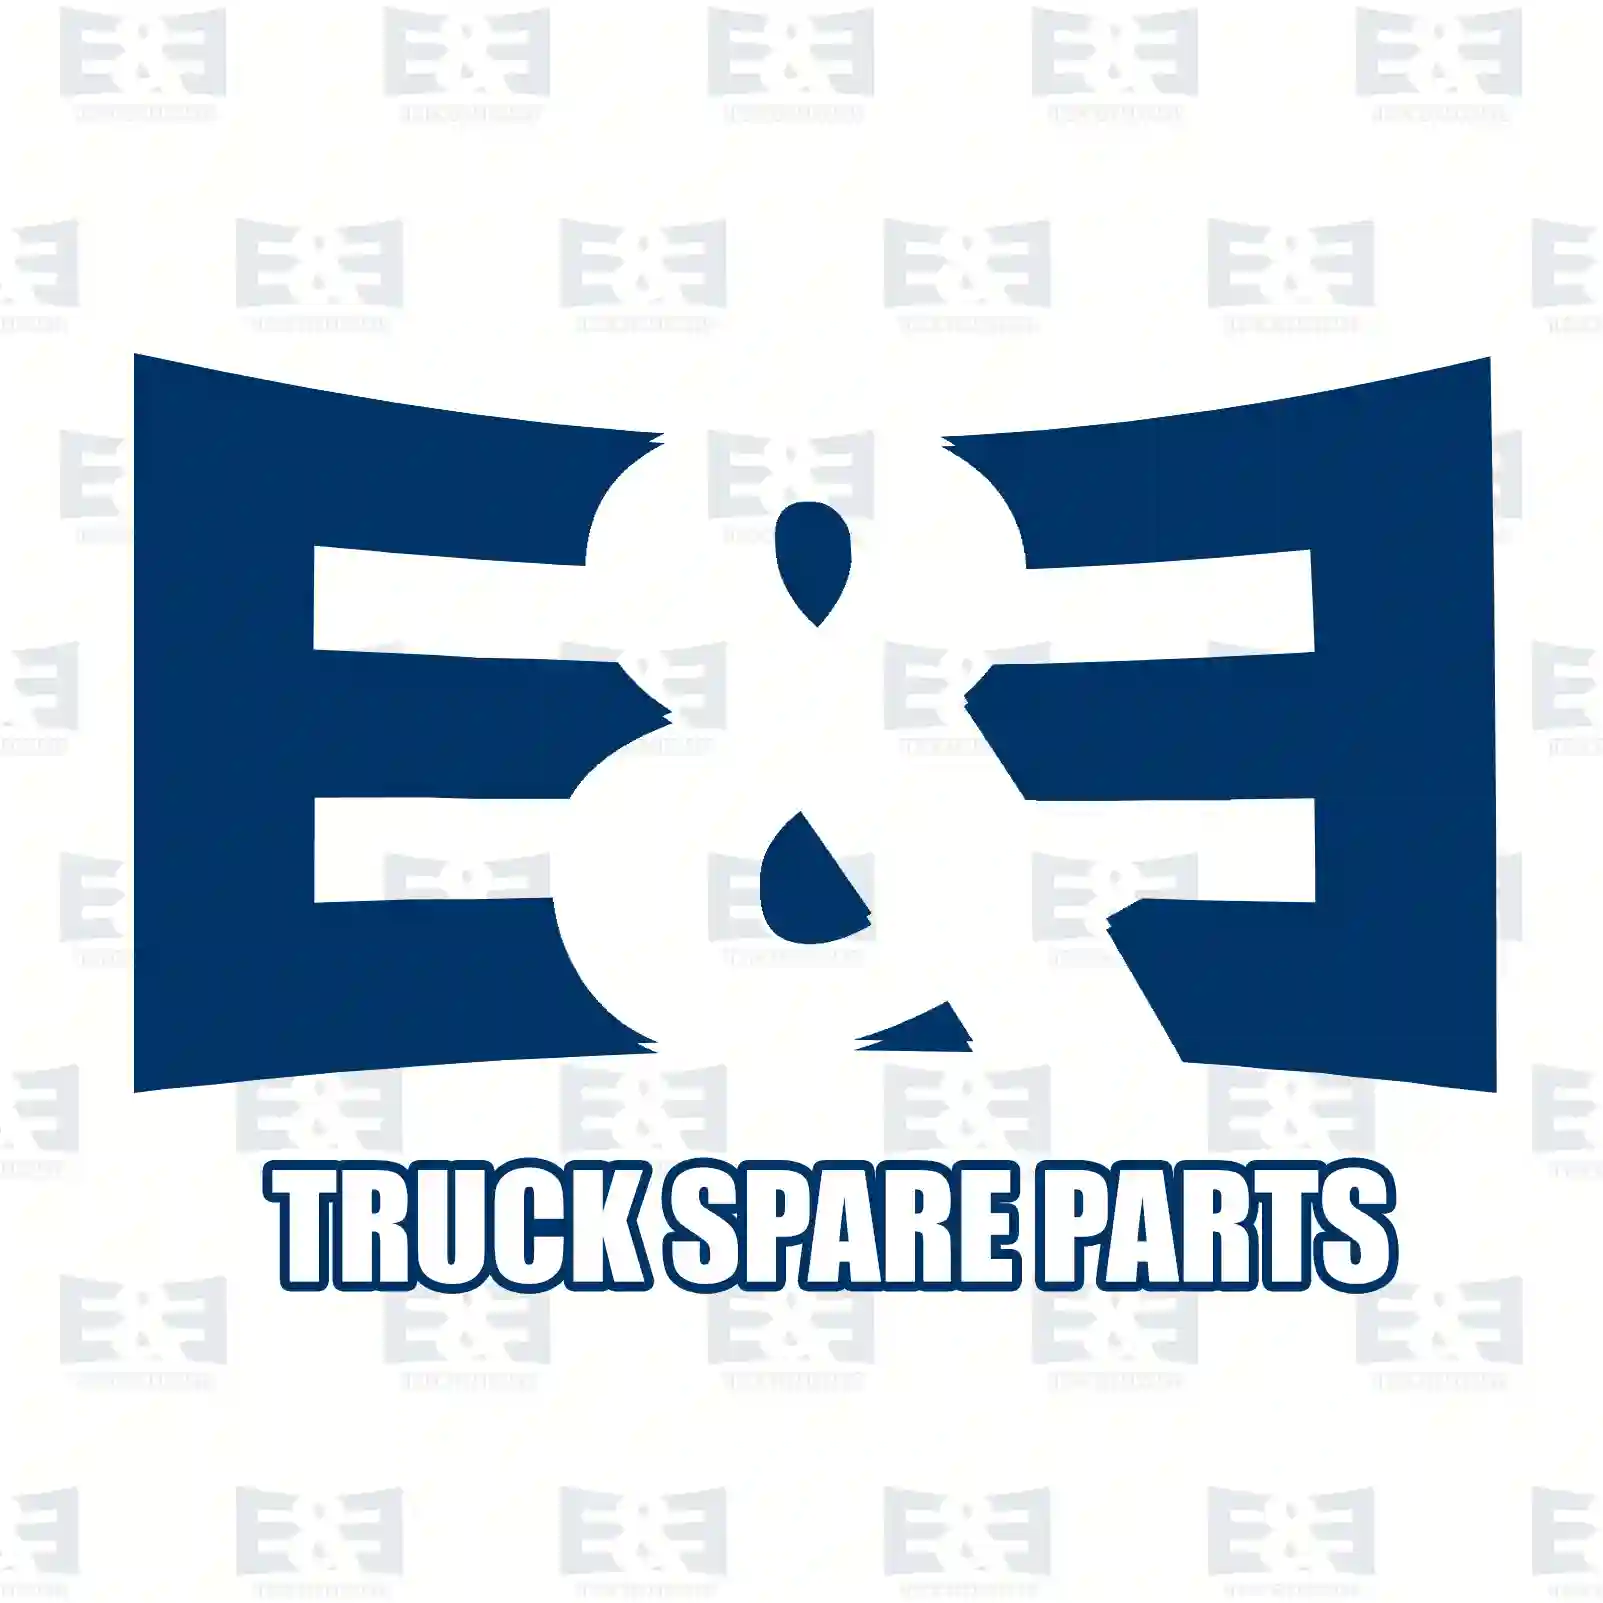 Engine mounting, 2E2277397, 2222211, 2592761 ||  2E2277397 E&E Truck Spare Parts | Truck Spare Parts, Auotomotive Spare Parts Engine mounting, 2E2277397, 2222211, 2592761 ||  2E2277397 E&E Truck Spare Parts | Truck Spare Parts, Auotomotive Spare Parts